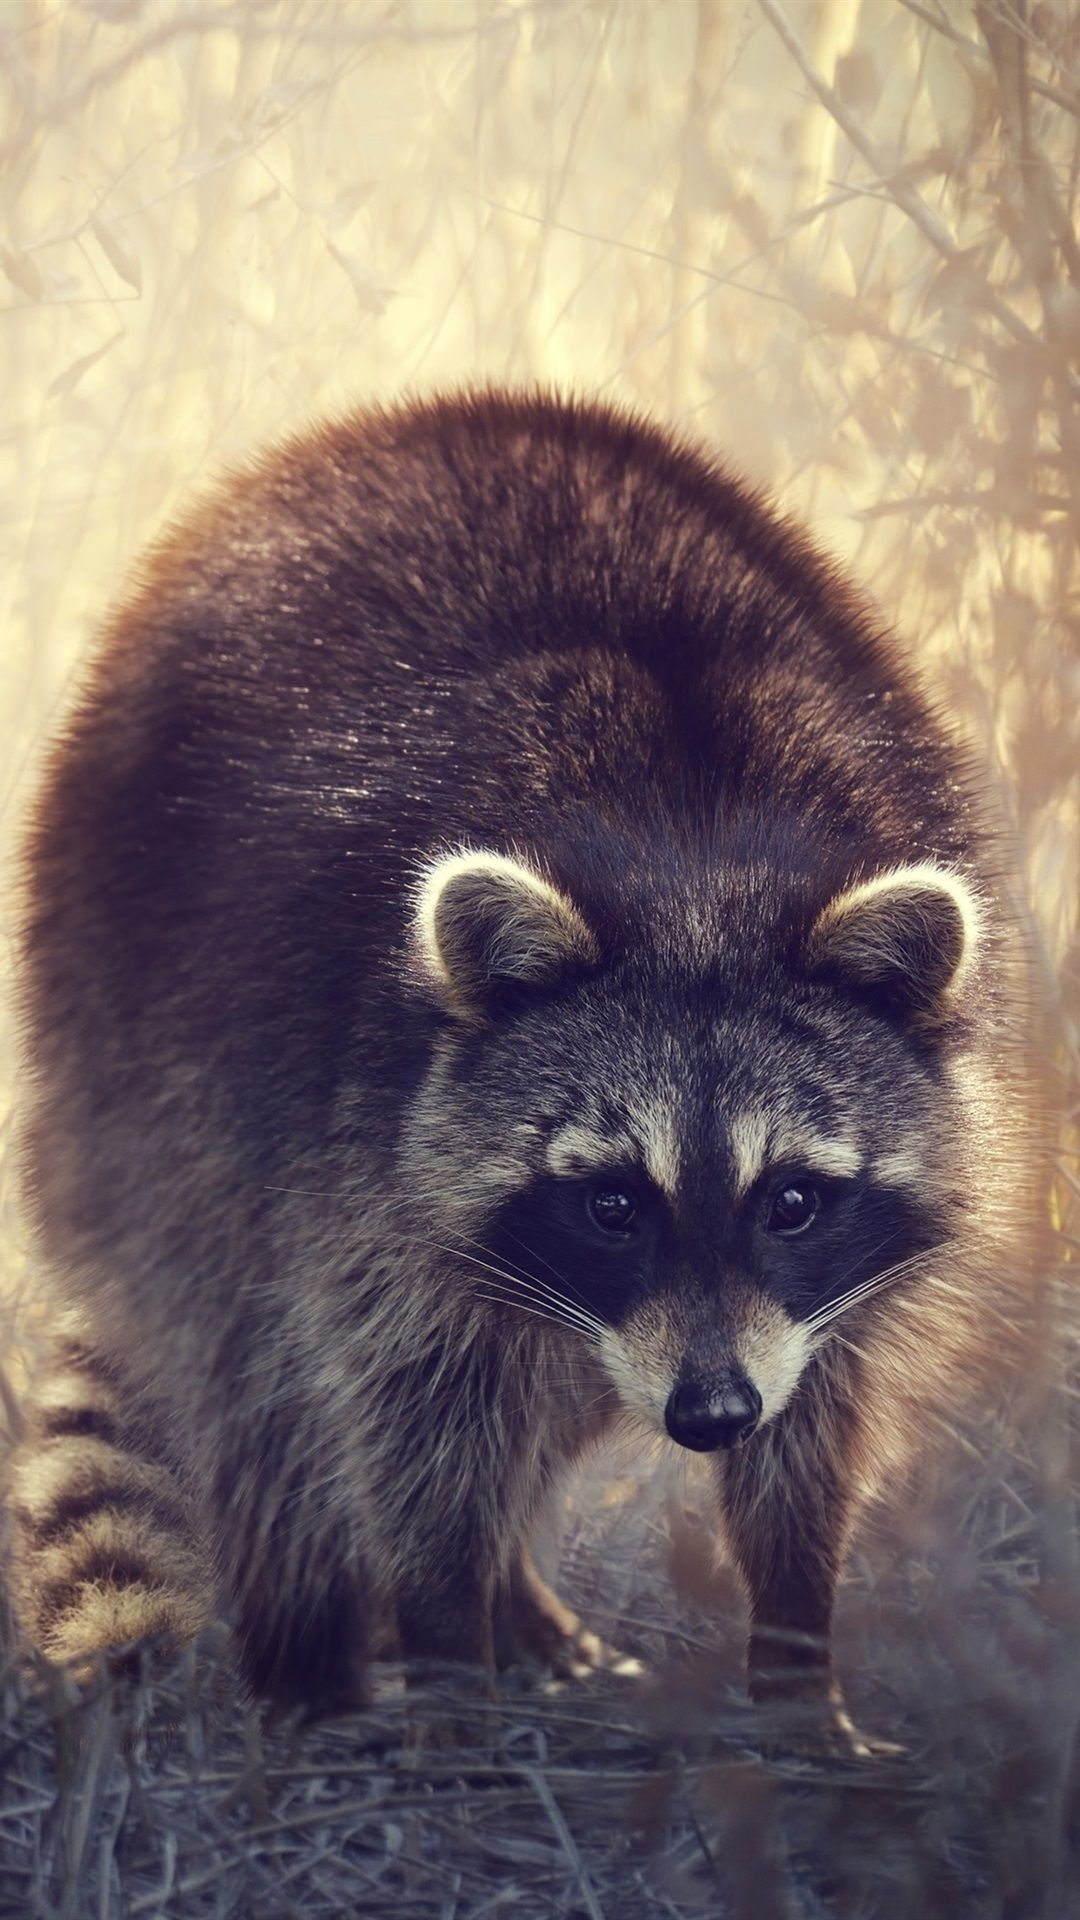 1080x1920 Raccoon iPhone Wallpapers Top Free Raccoon iPhone Backgrounds